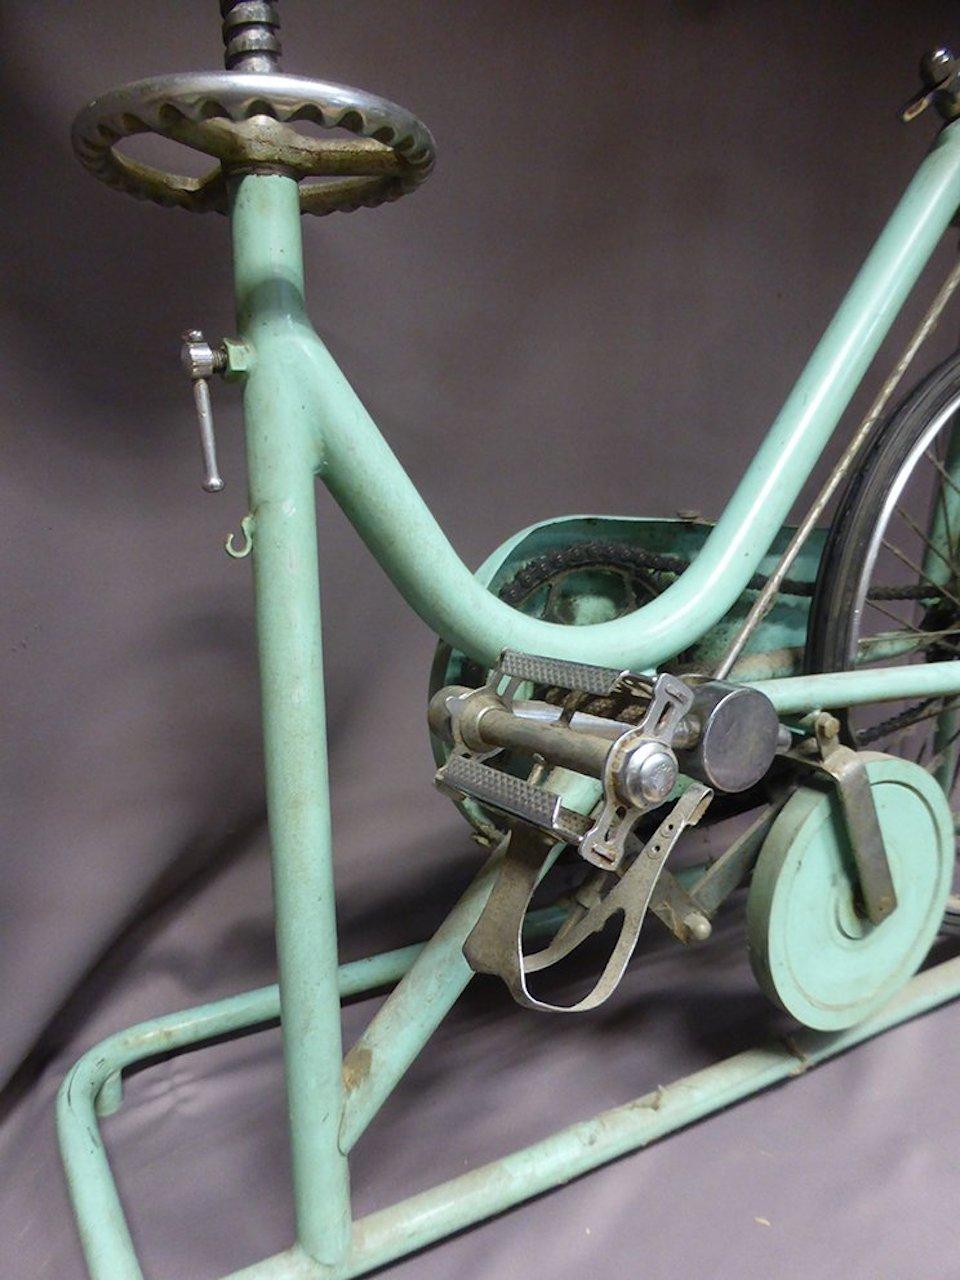 20th Century Thiret French Vintage Training Bike, 1950s 1